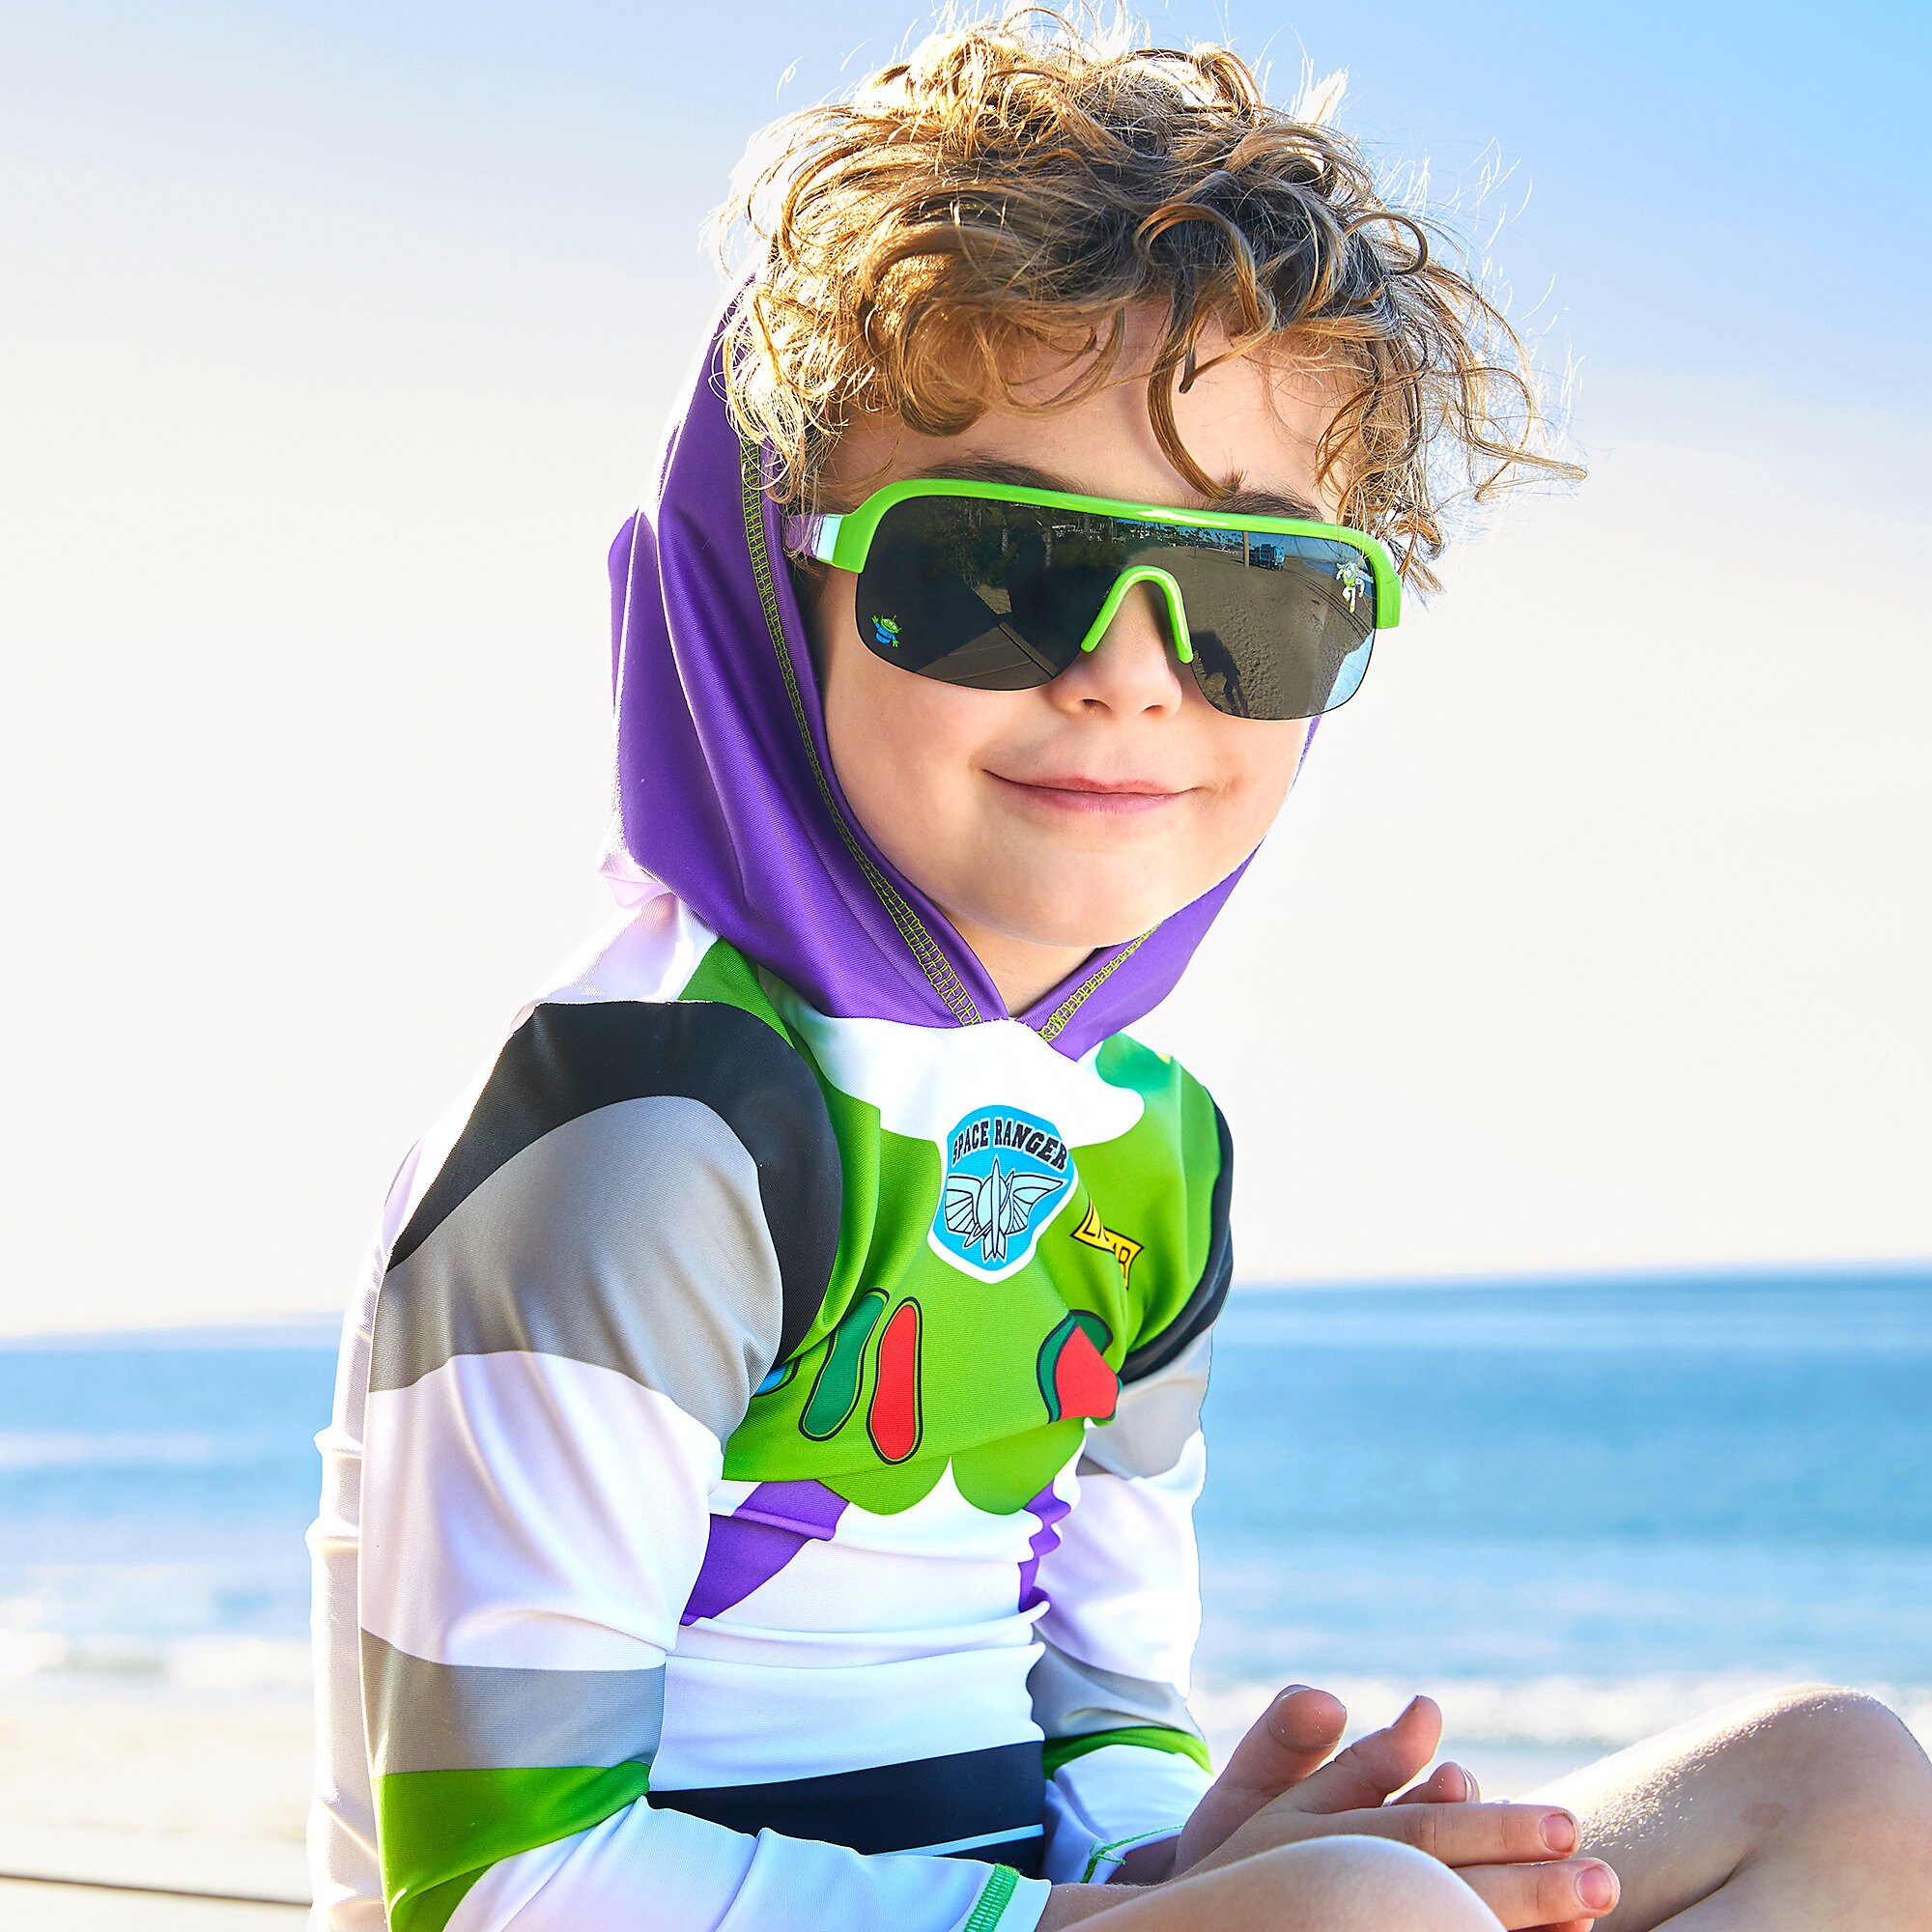 Buzz Lightyear Hooded Rash Guard for Kids